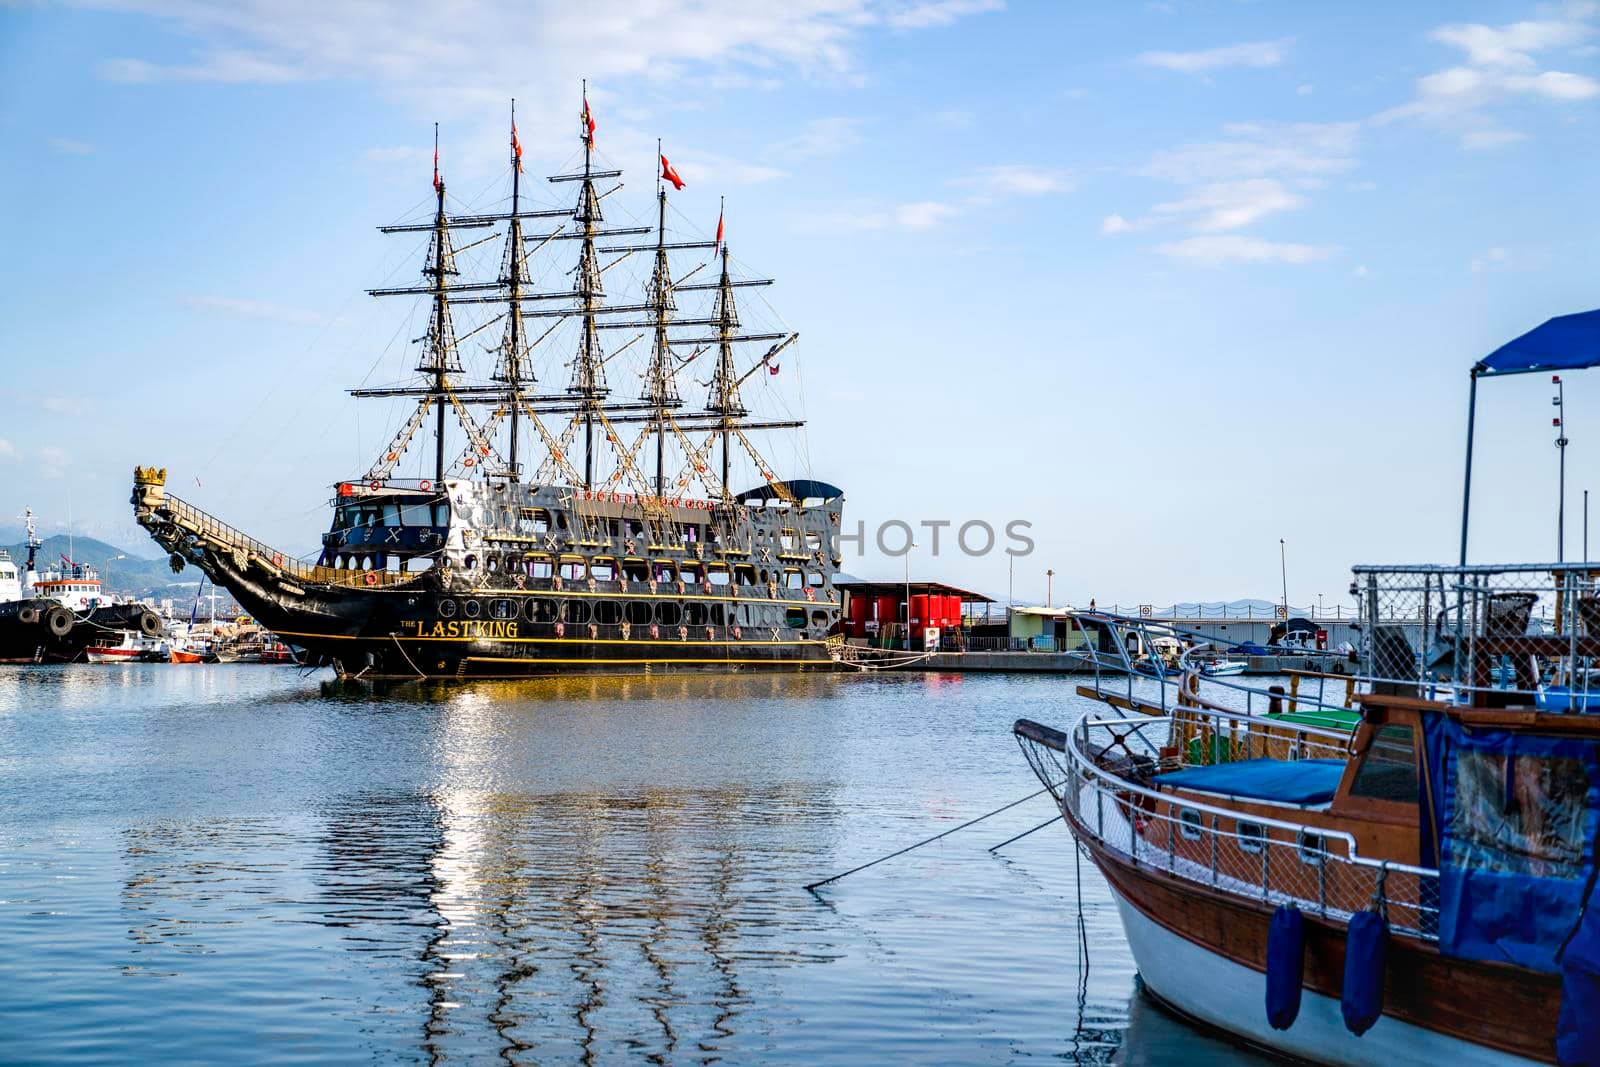 Turkey, Alanya - November 9, 2020: Pirate ship moored in bay. by Laguna781